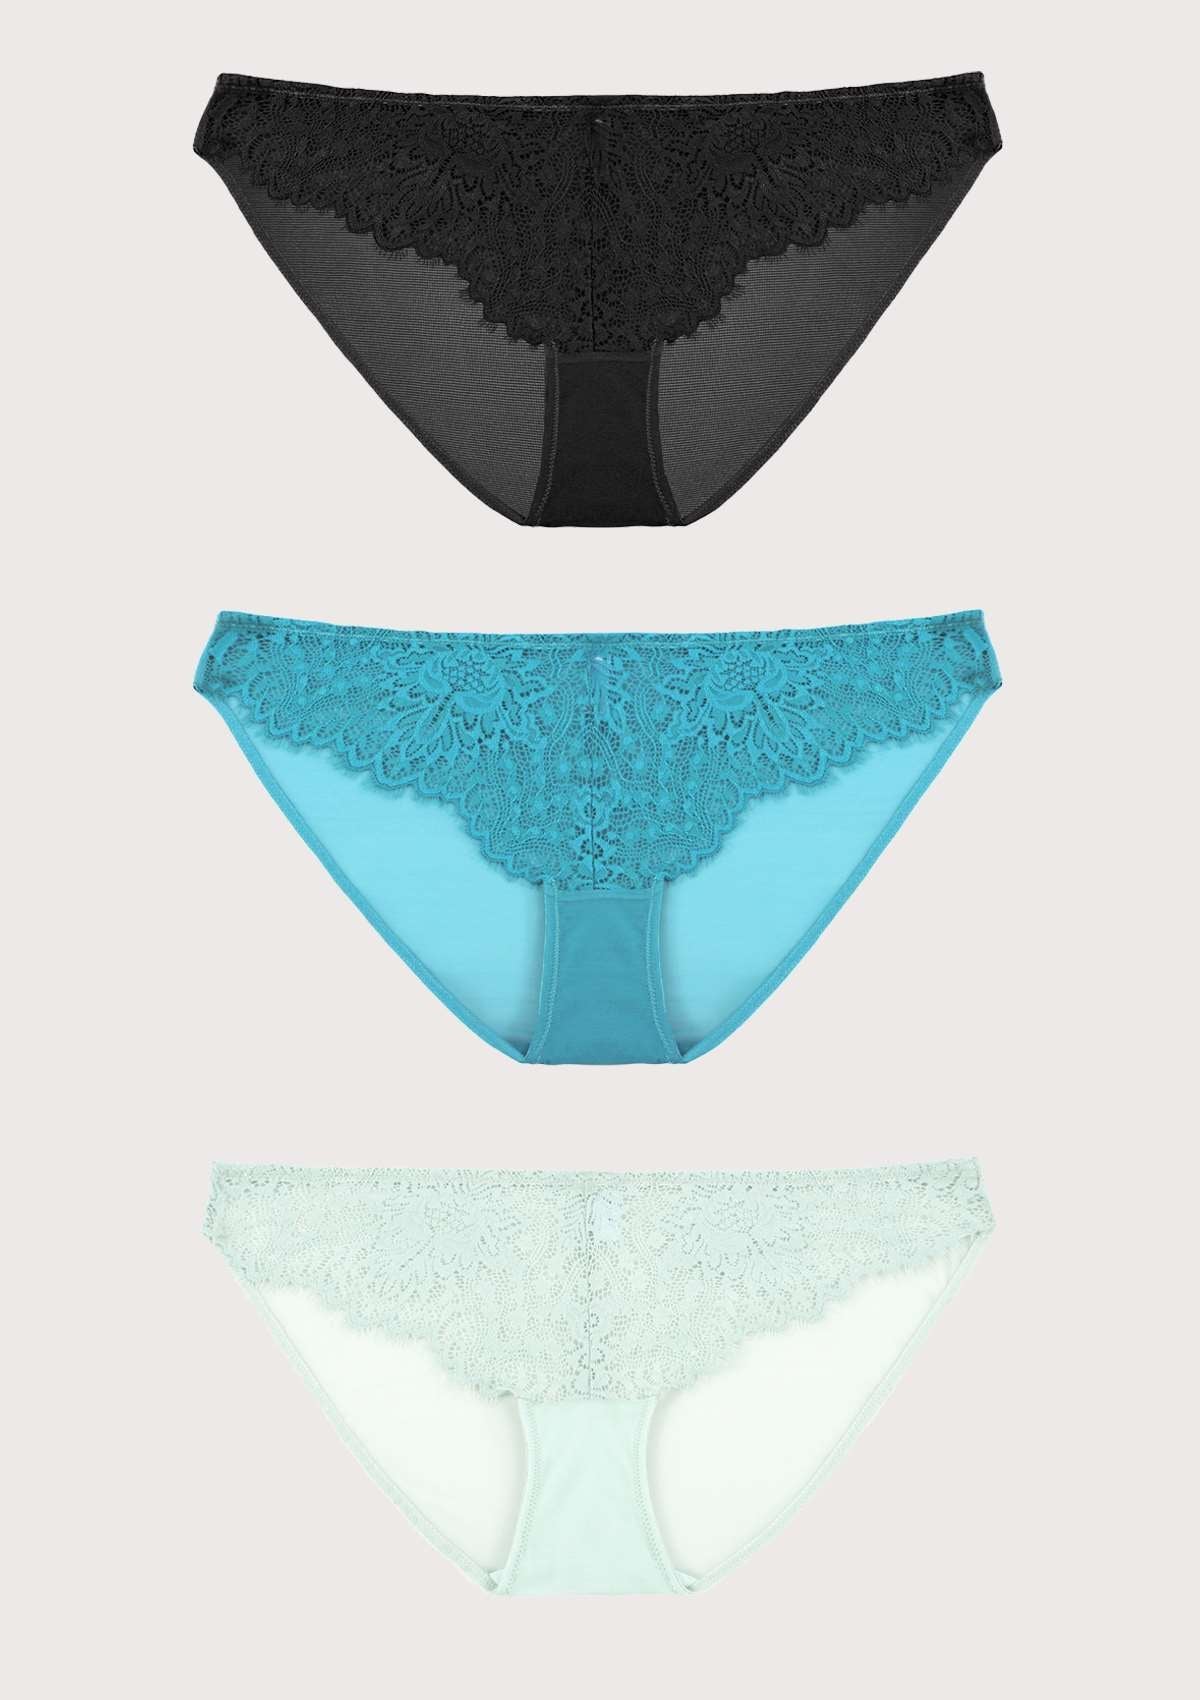 HSIA Sunflower Exquisite Lighweight Soft Lace Bikini Panties 3 Pack - XL / Black+Horizon Blue+Pink